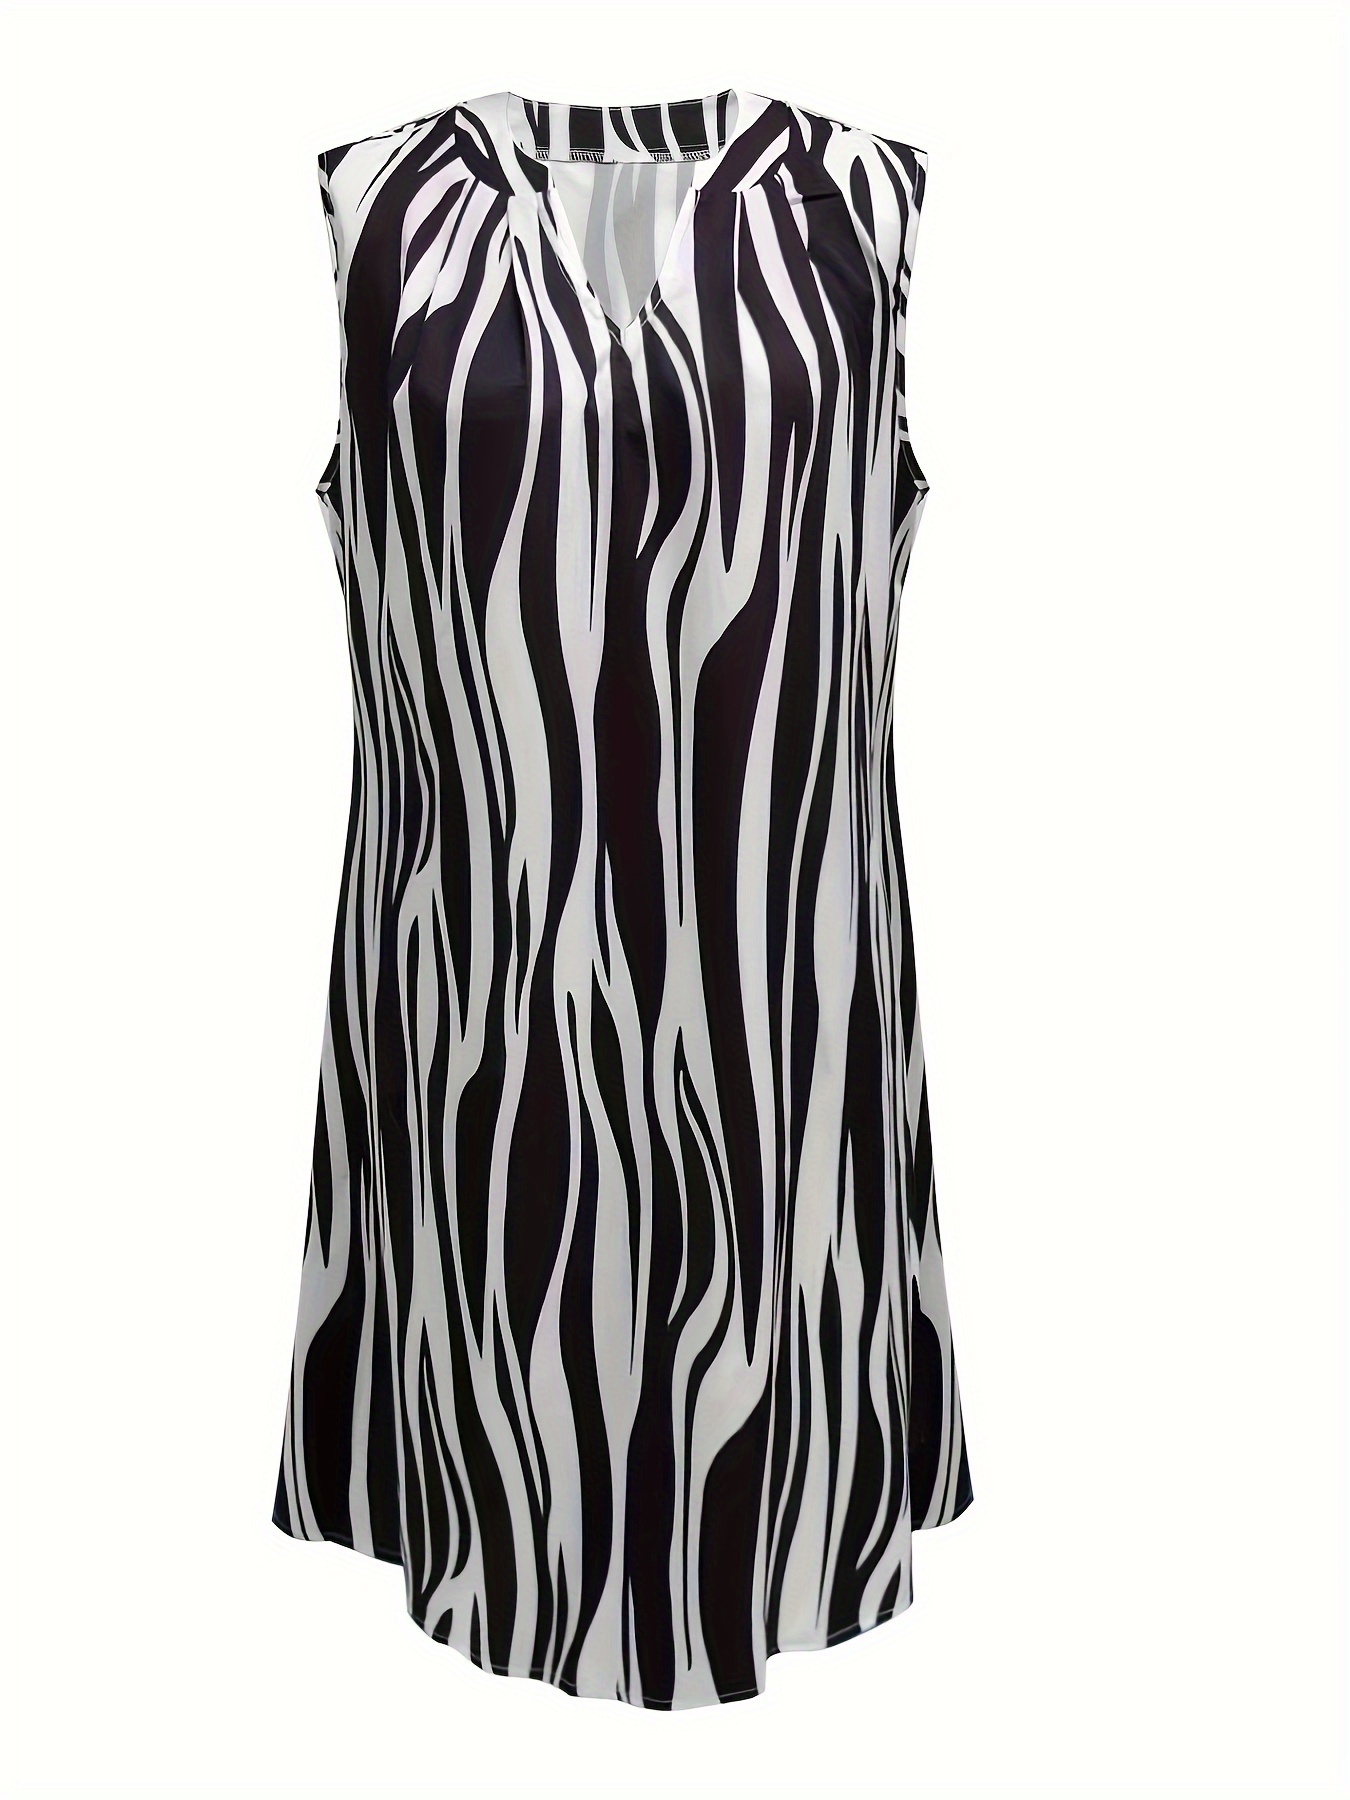 abstract ripple print dress casual v neck sleeveless dress womens clothing details 47